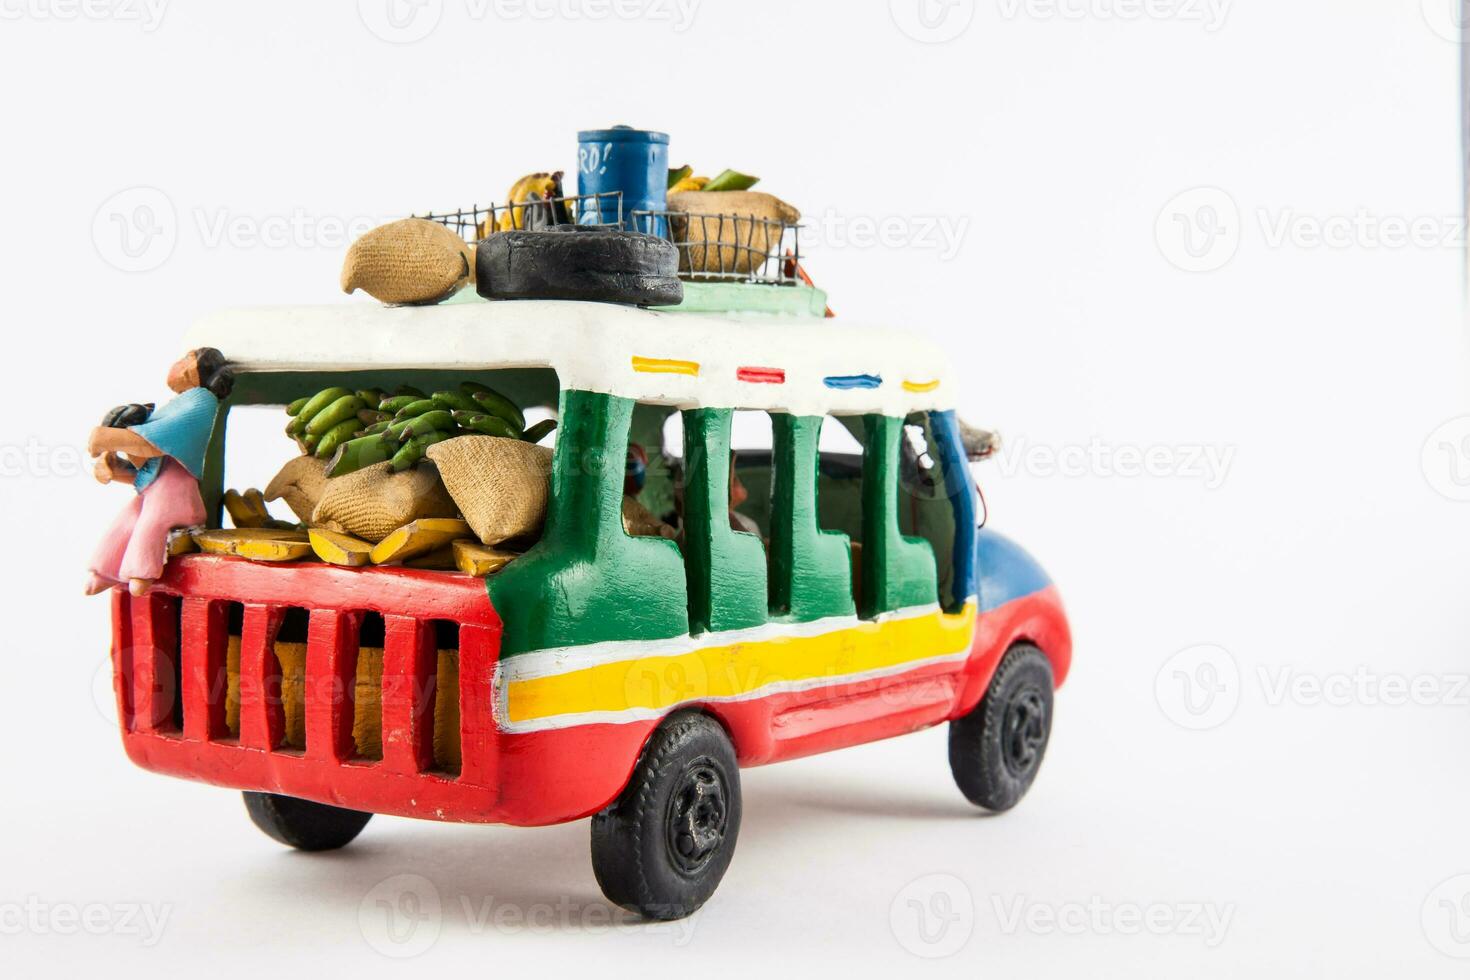 colorida tradicional rural ônibus a partir de Colômbia chamado chiva isolado em branco fundo foto